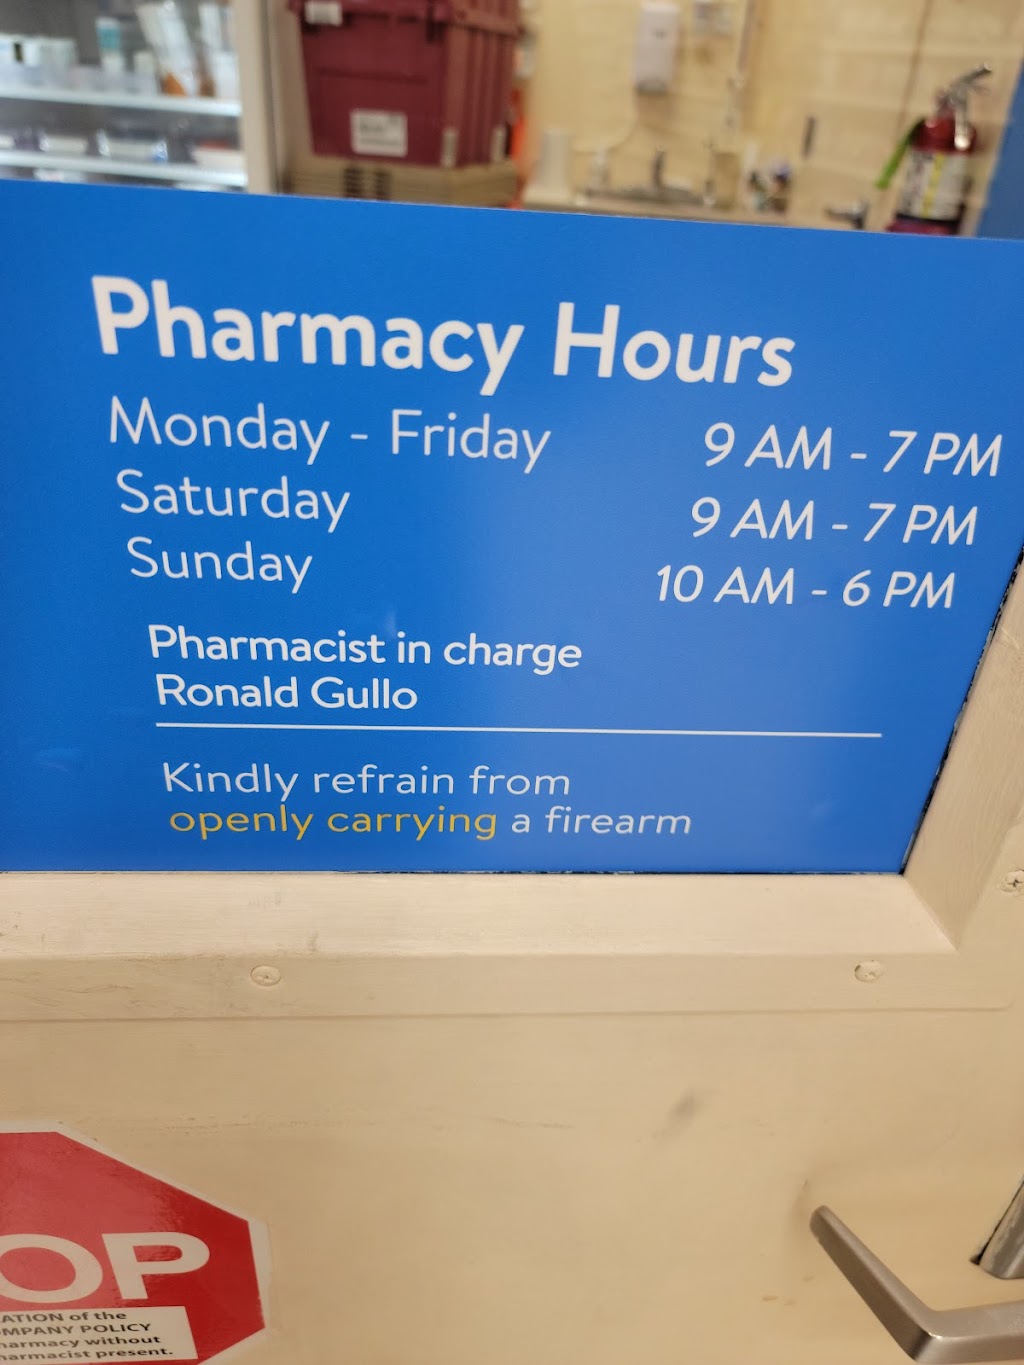 Walmart Pharmacy | 40 International Dr S, Flanders, NJ 07836 | Phone: (973) 347-8060